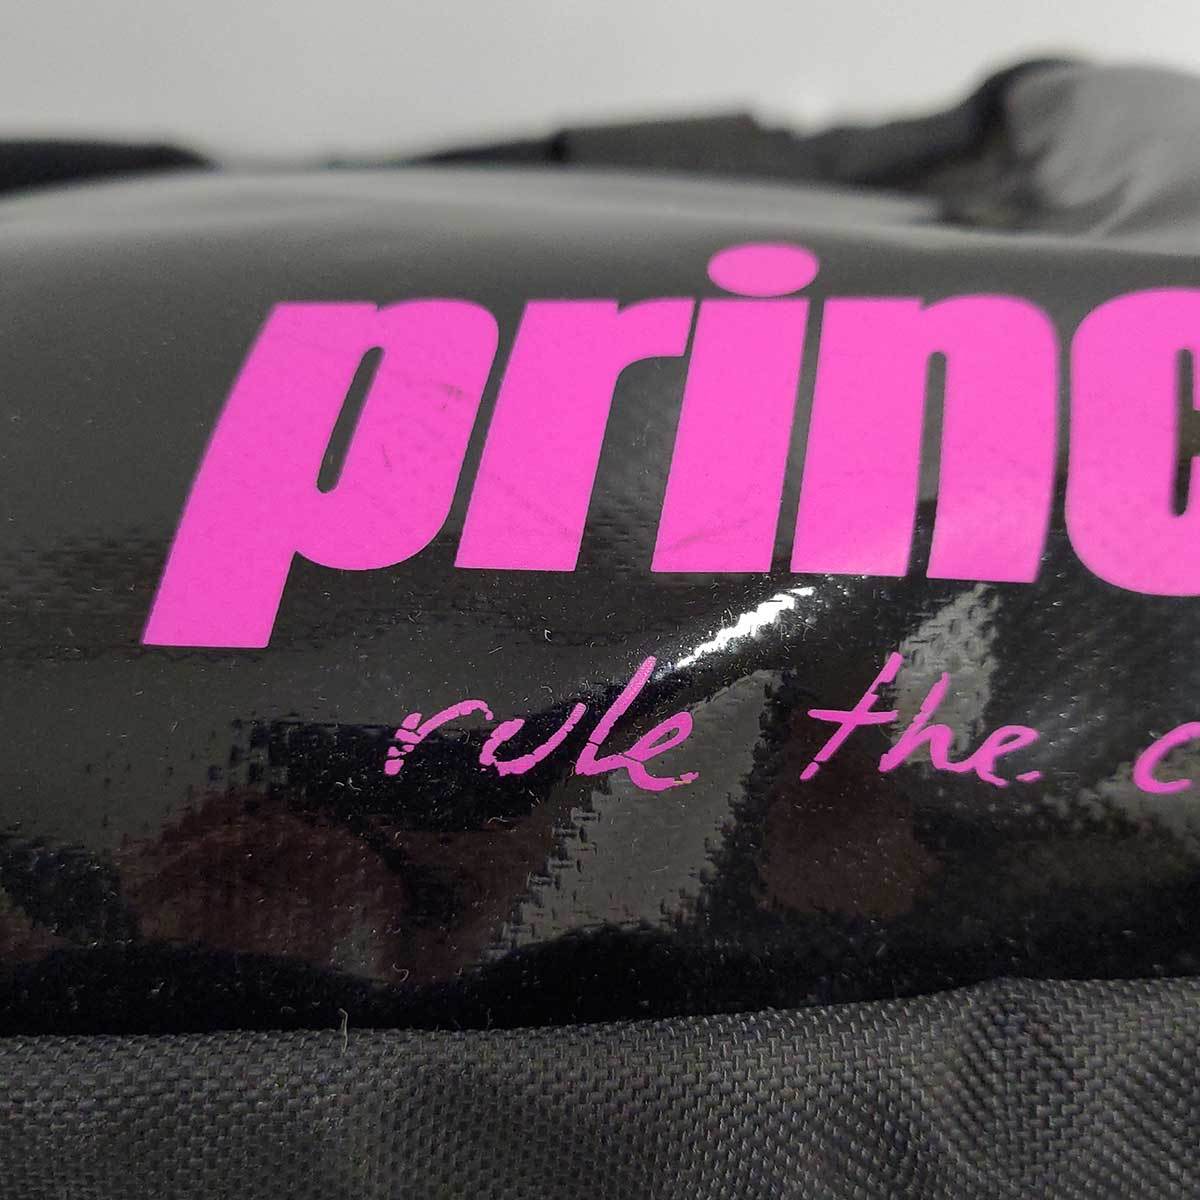 [ used ] Prince enamel 2WAY Boston bag shoulder black x pink Prince tennis bag large 